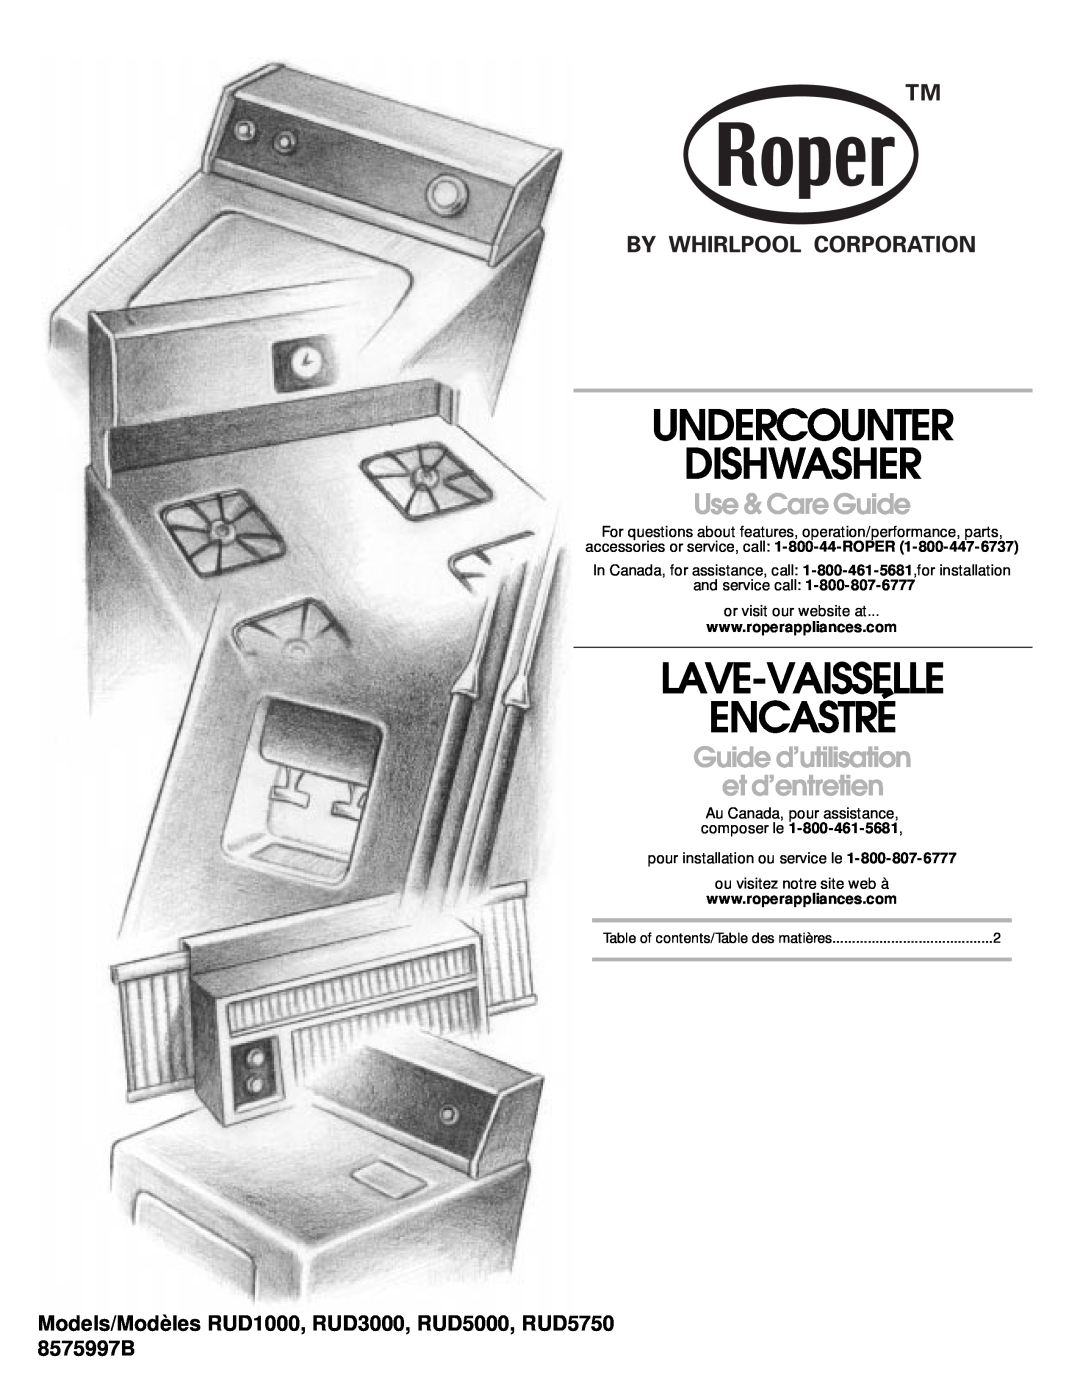 Roper manual Undercounter Dishwasher, Lave-Vaisselle Encastré, Models/Modèles RUD1000, RUD3000, RUD5000, RUD5750 